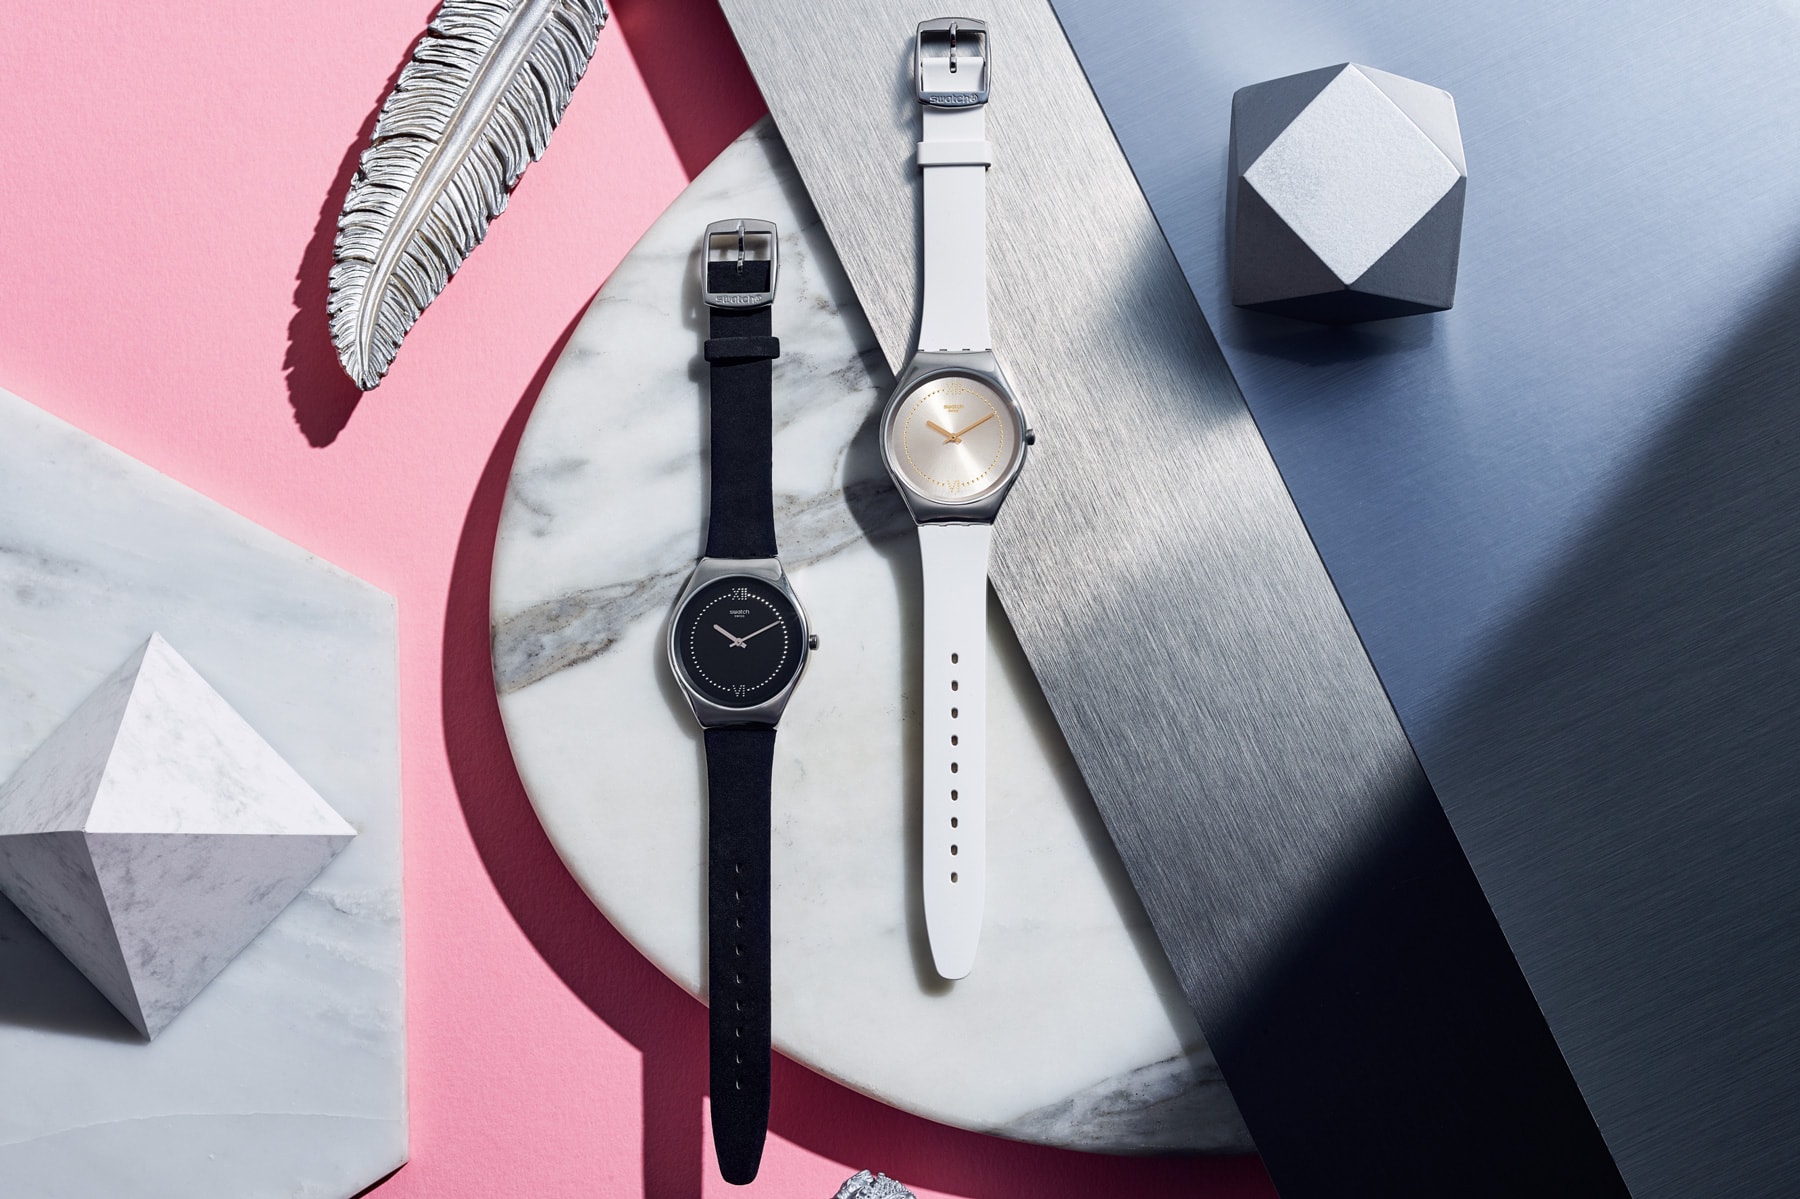 Swatch 首個超薄金屬手錶系列「SKIN Irony」正式登場